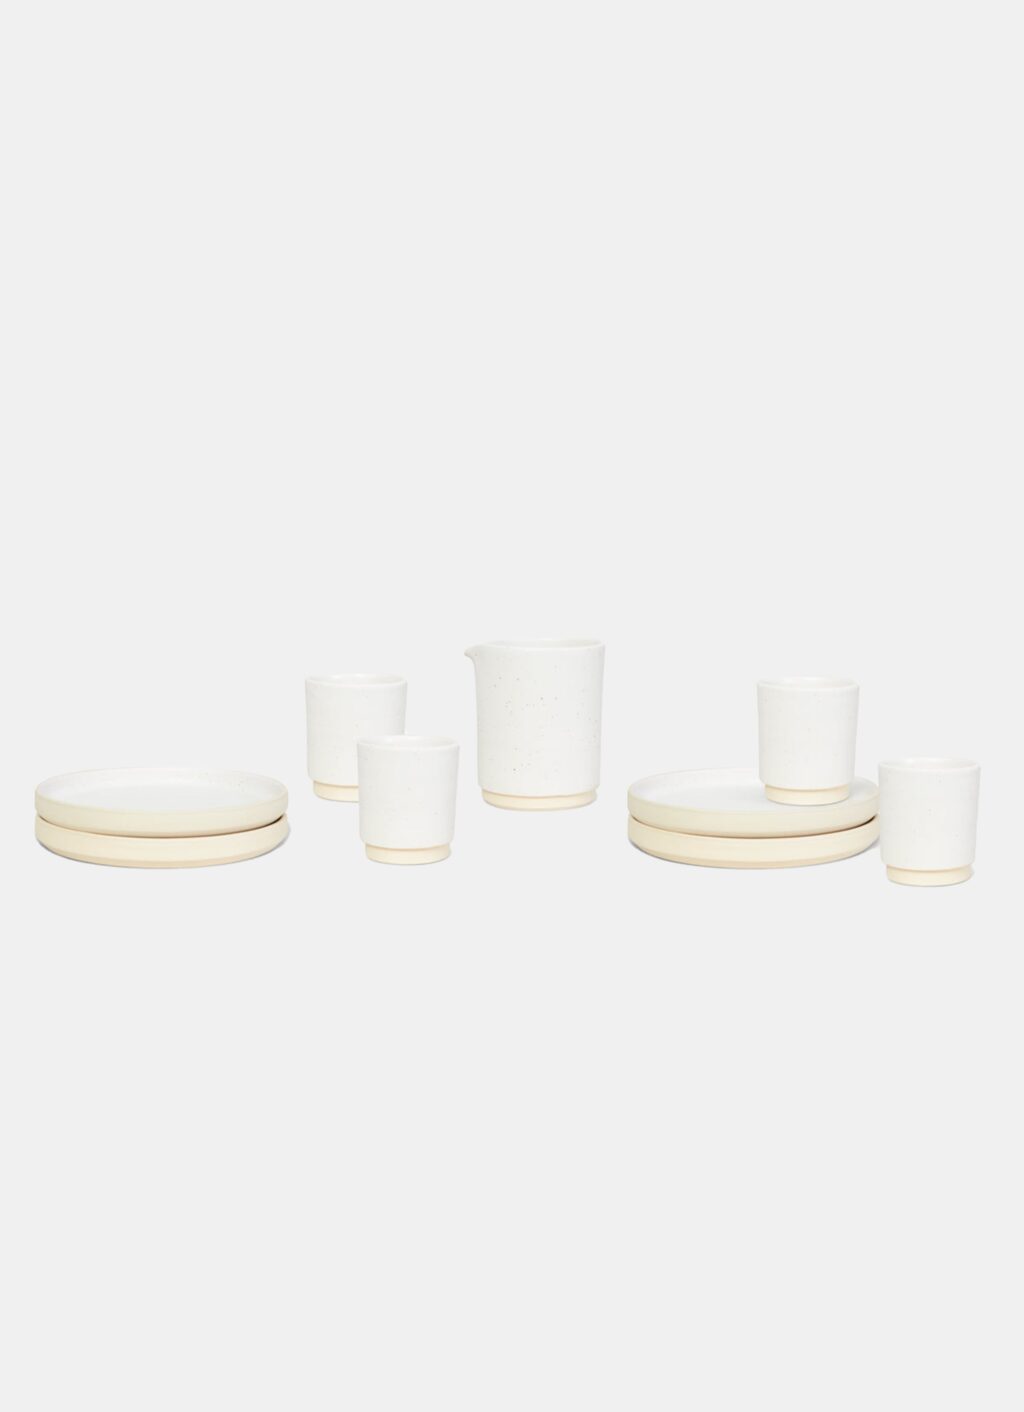 Frama - Otto Ceramic Lunch Set - White